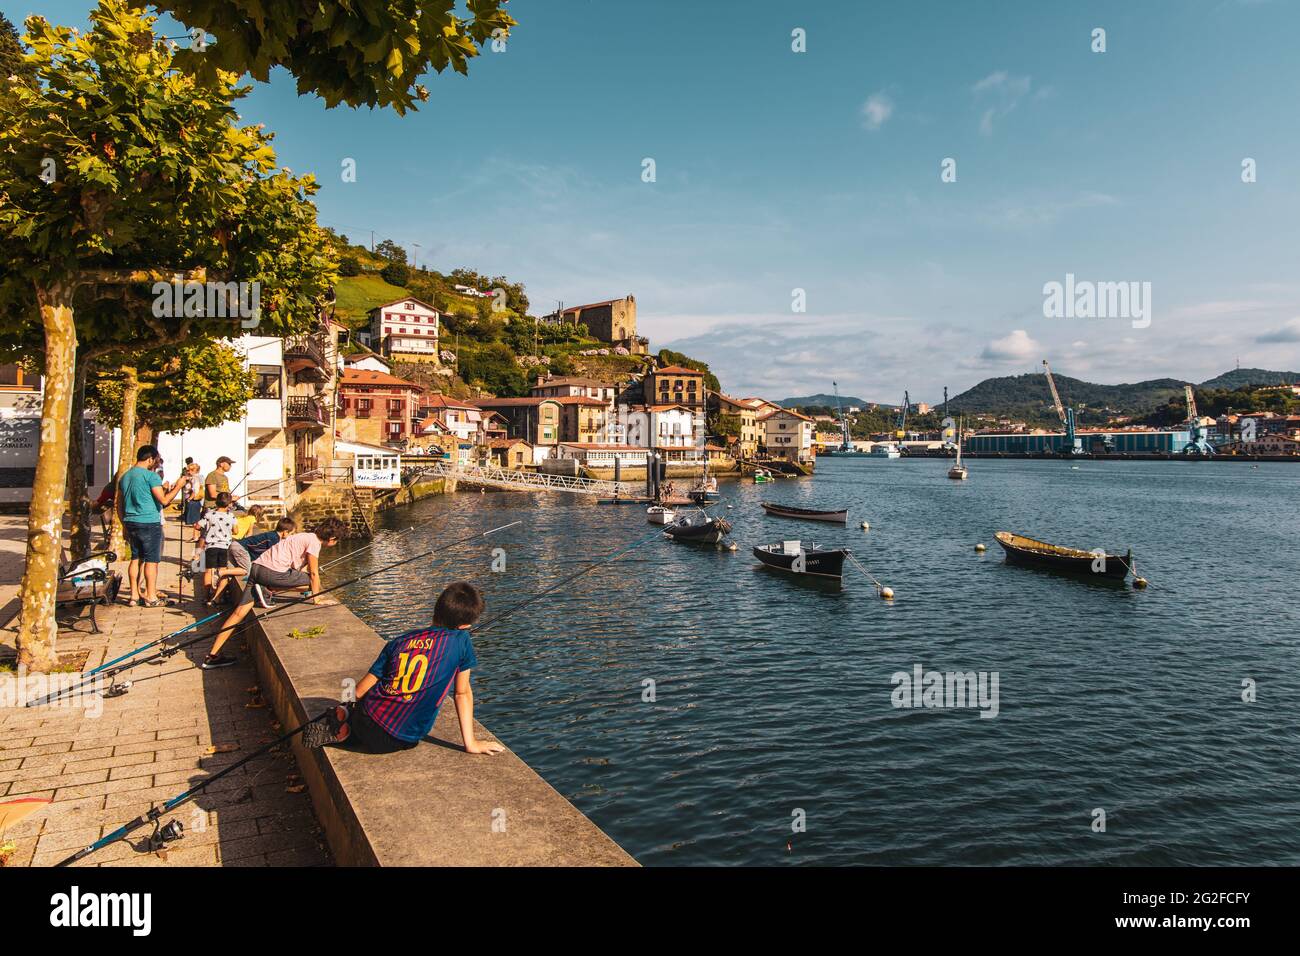 Pasaia Donibane - Fishing village - Donostia San Sebastian, Province of Gipuzkoa, Basque Country - Spain, Europe Stock Photo